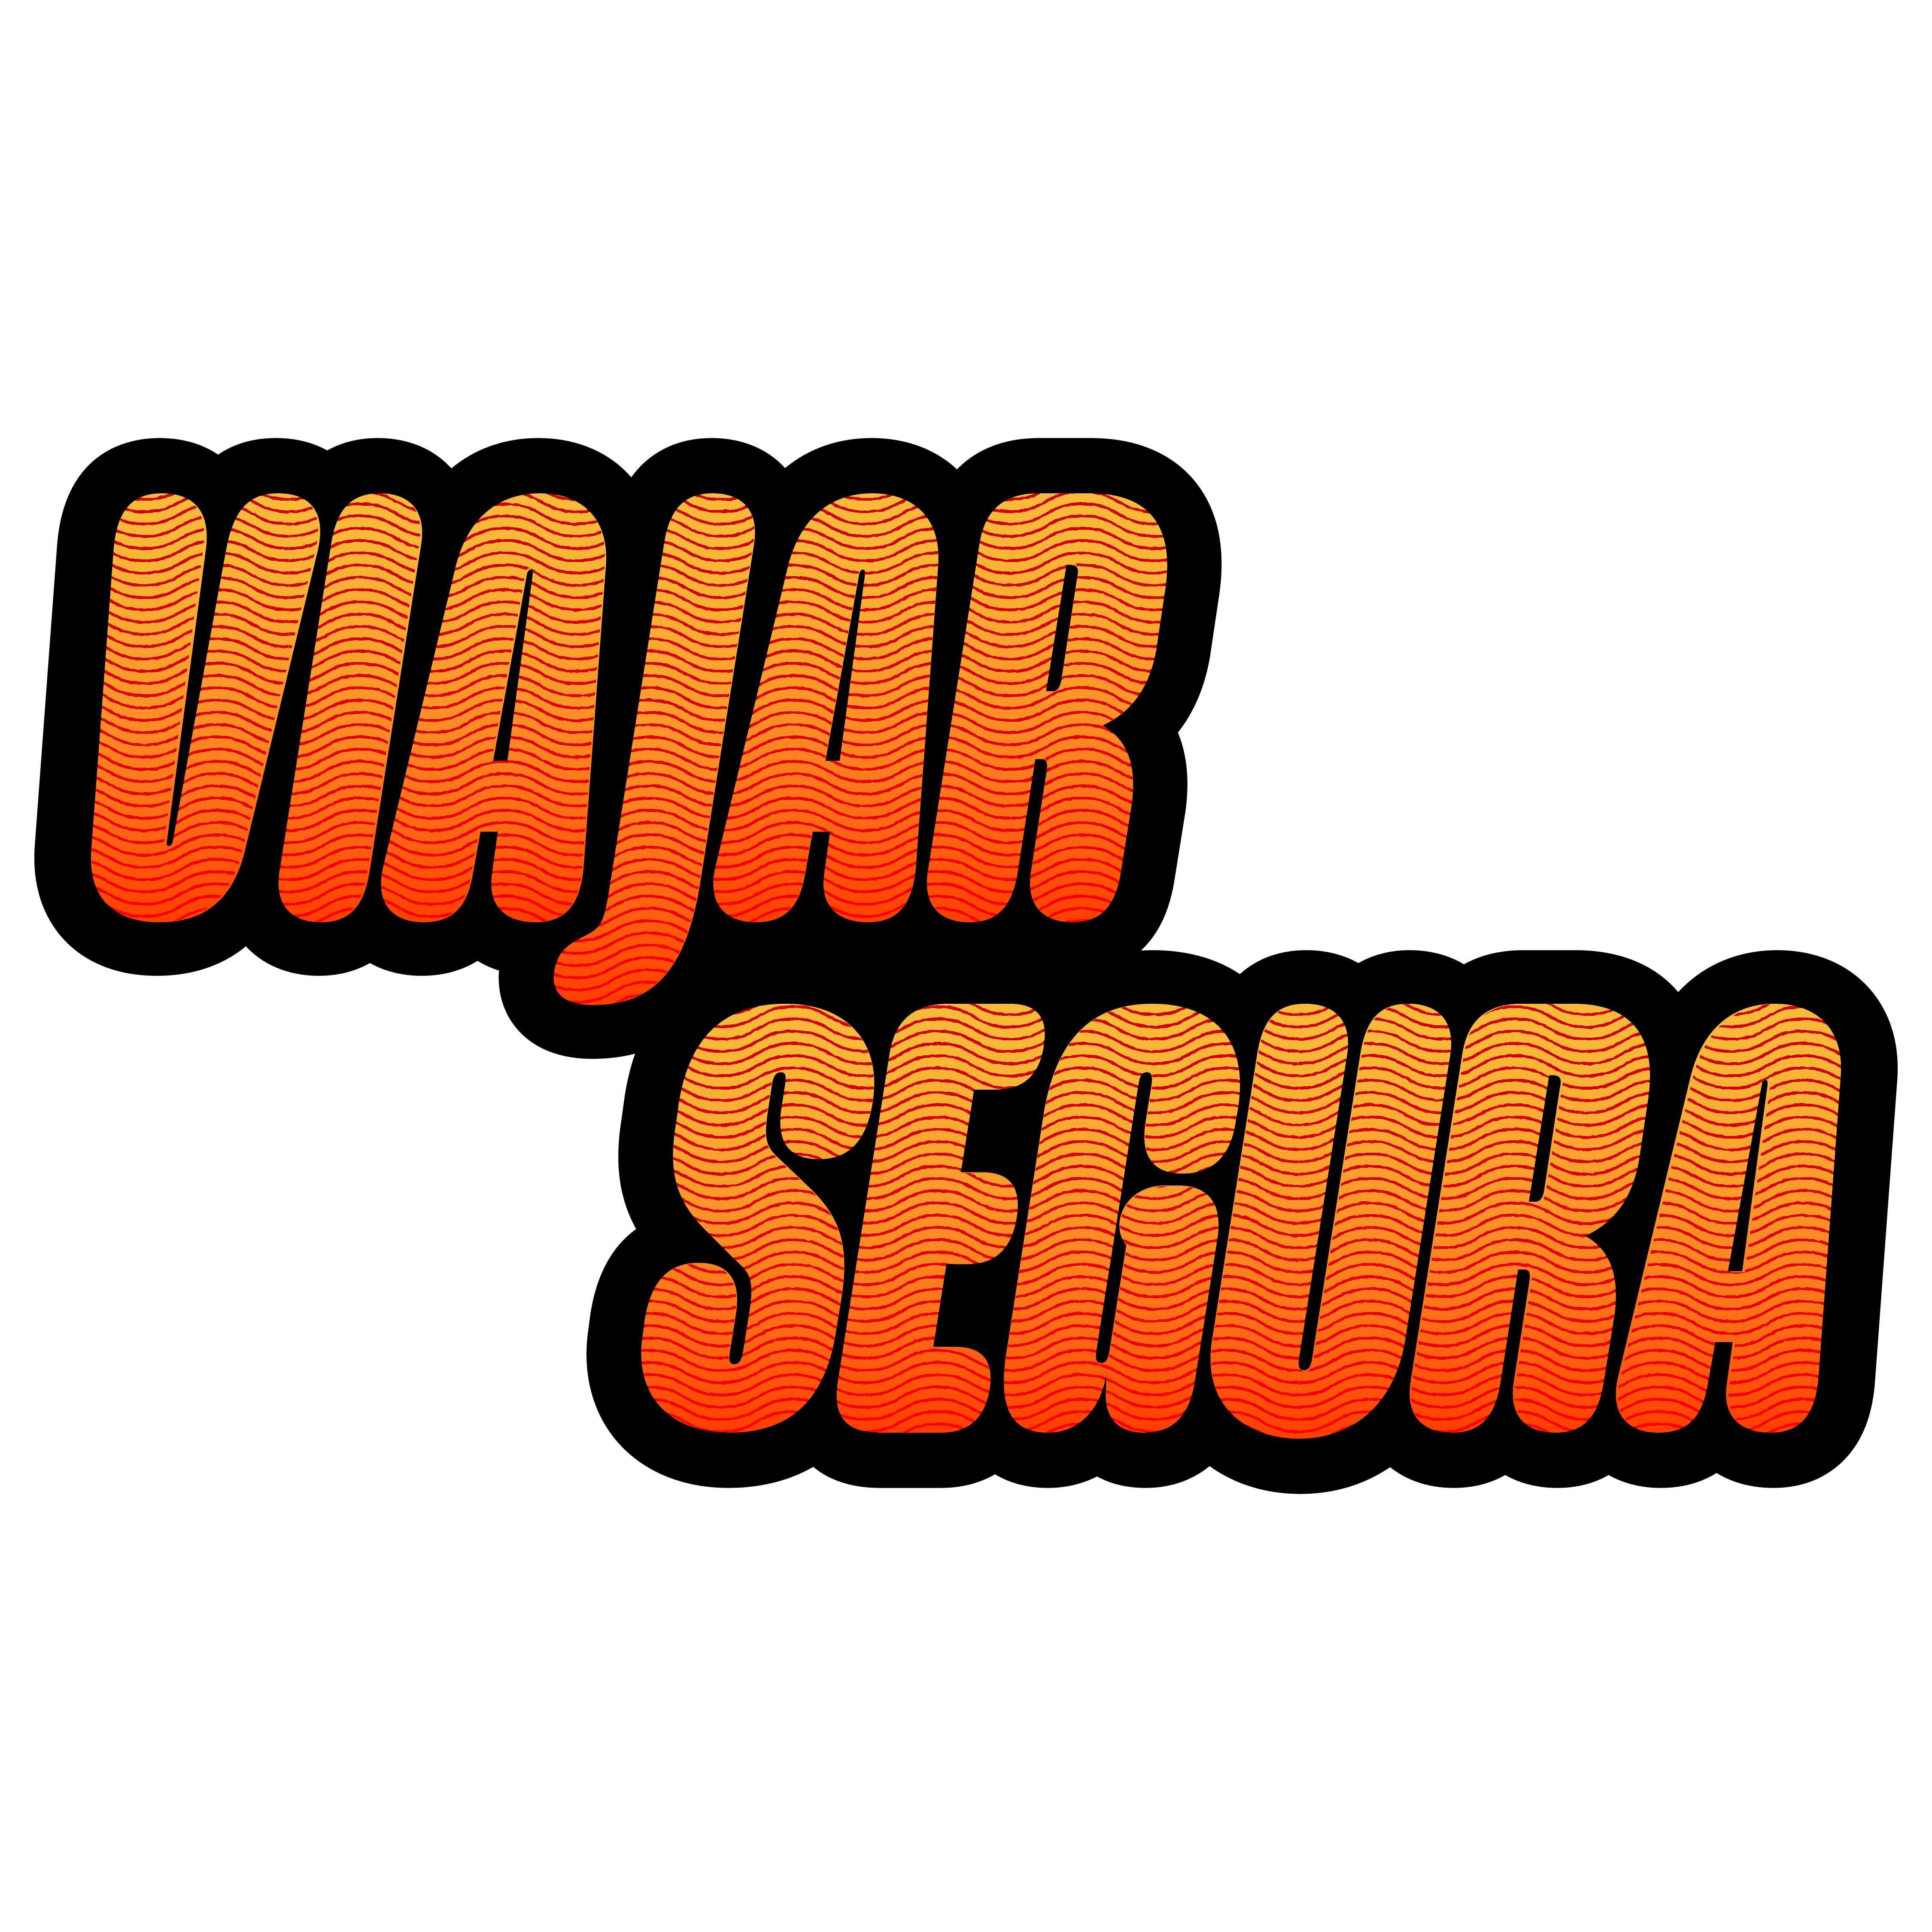 an illustration of the words viajar segura in orange with a black outline